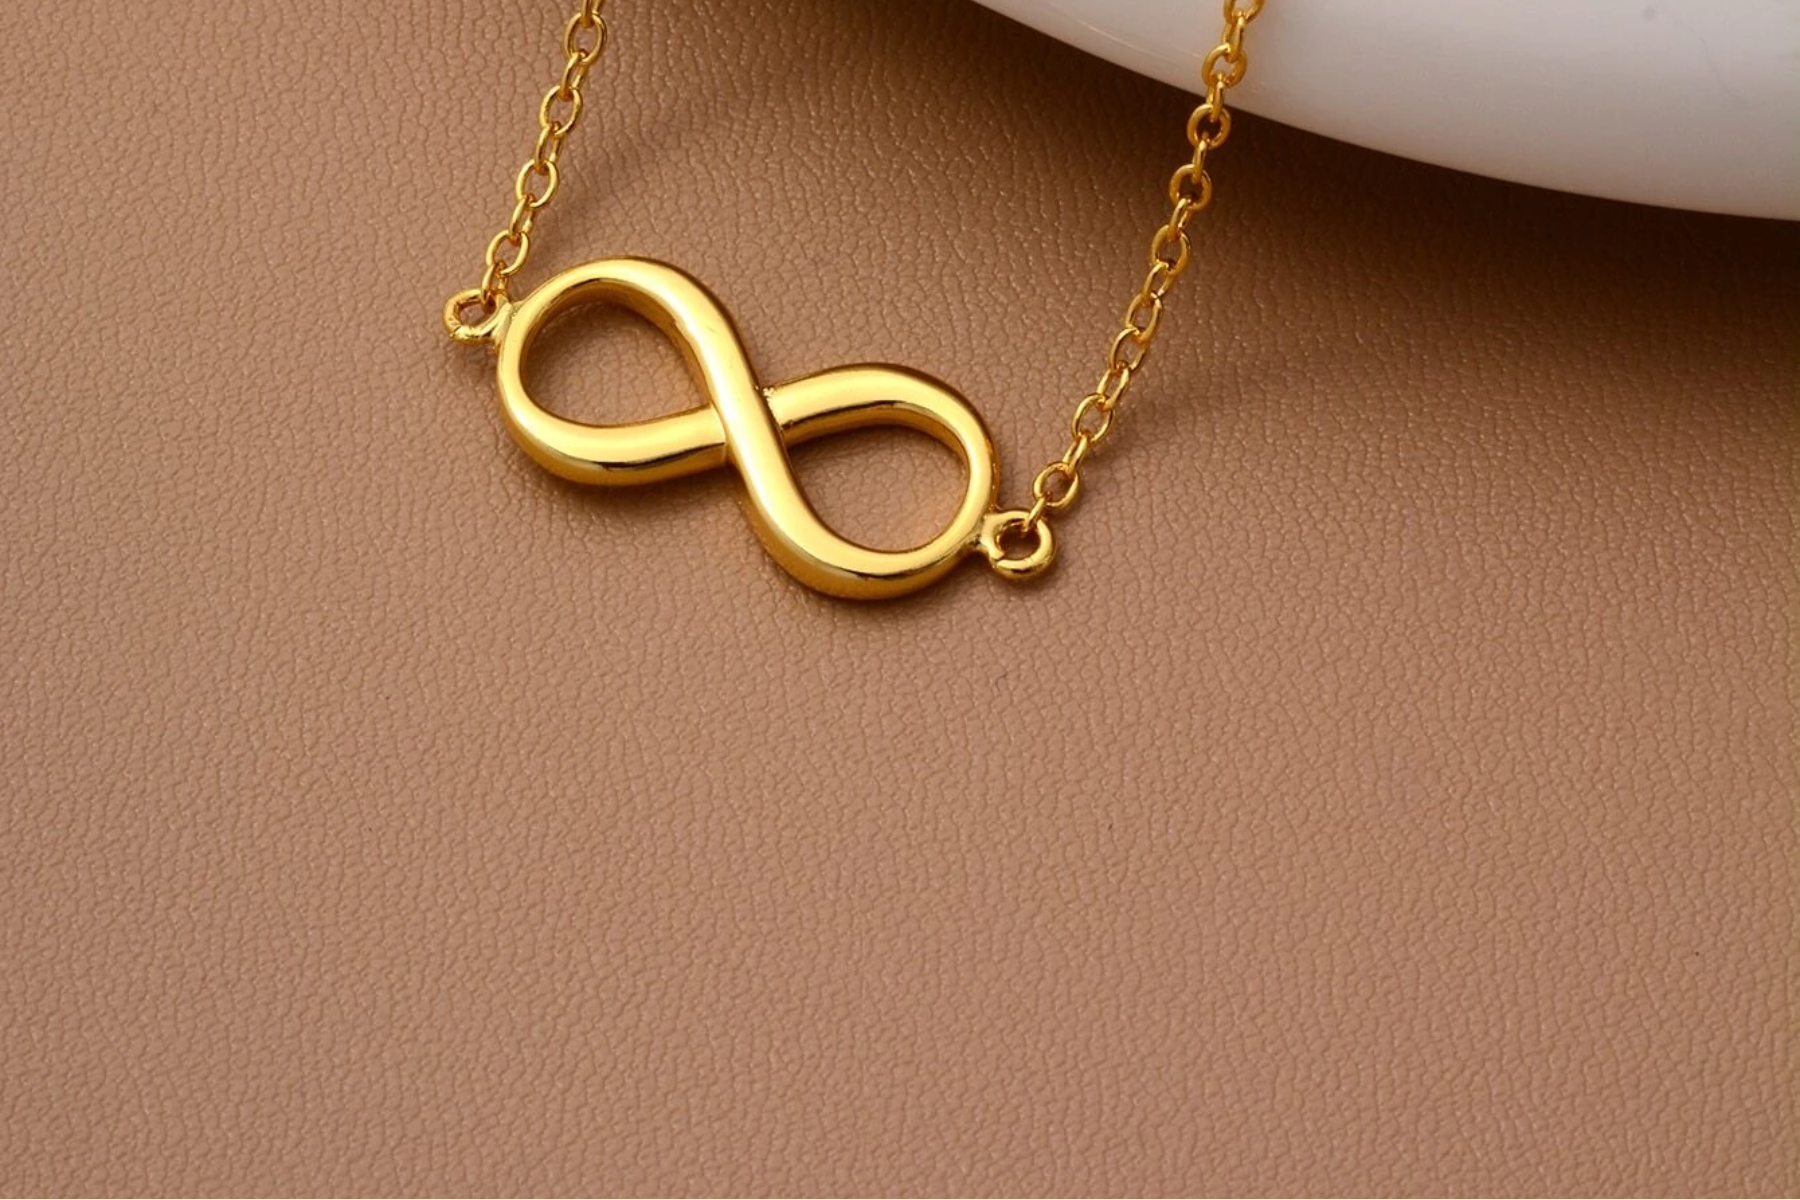 A gold infinity symbol